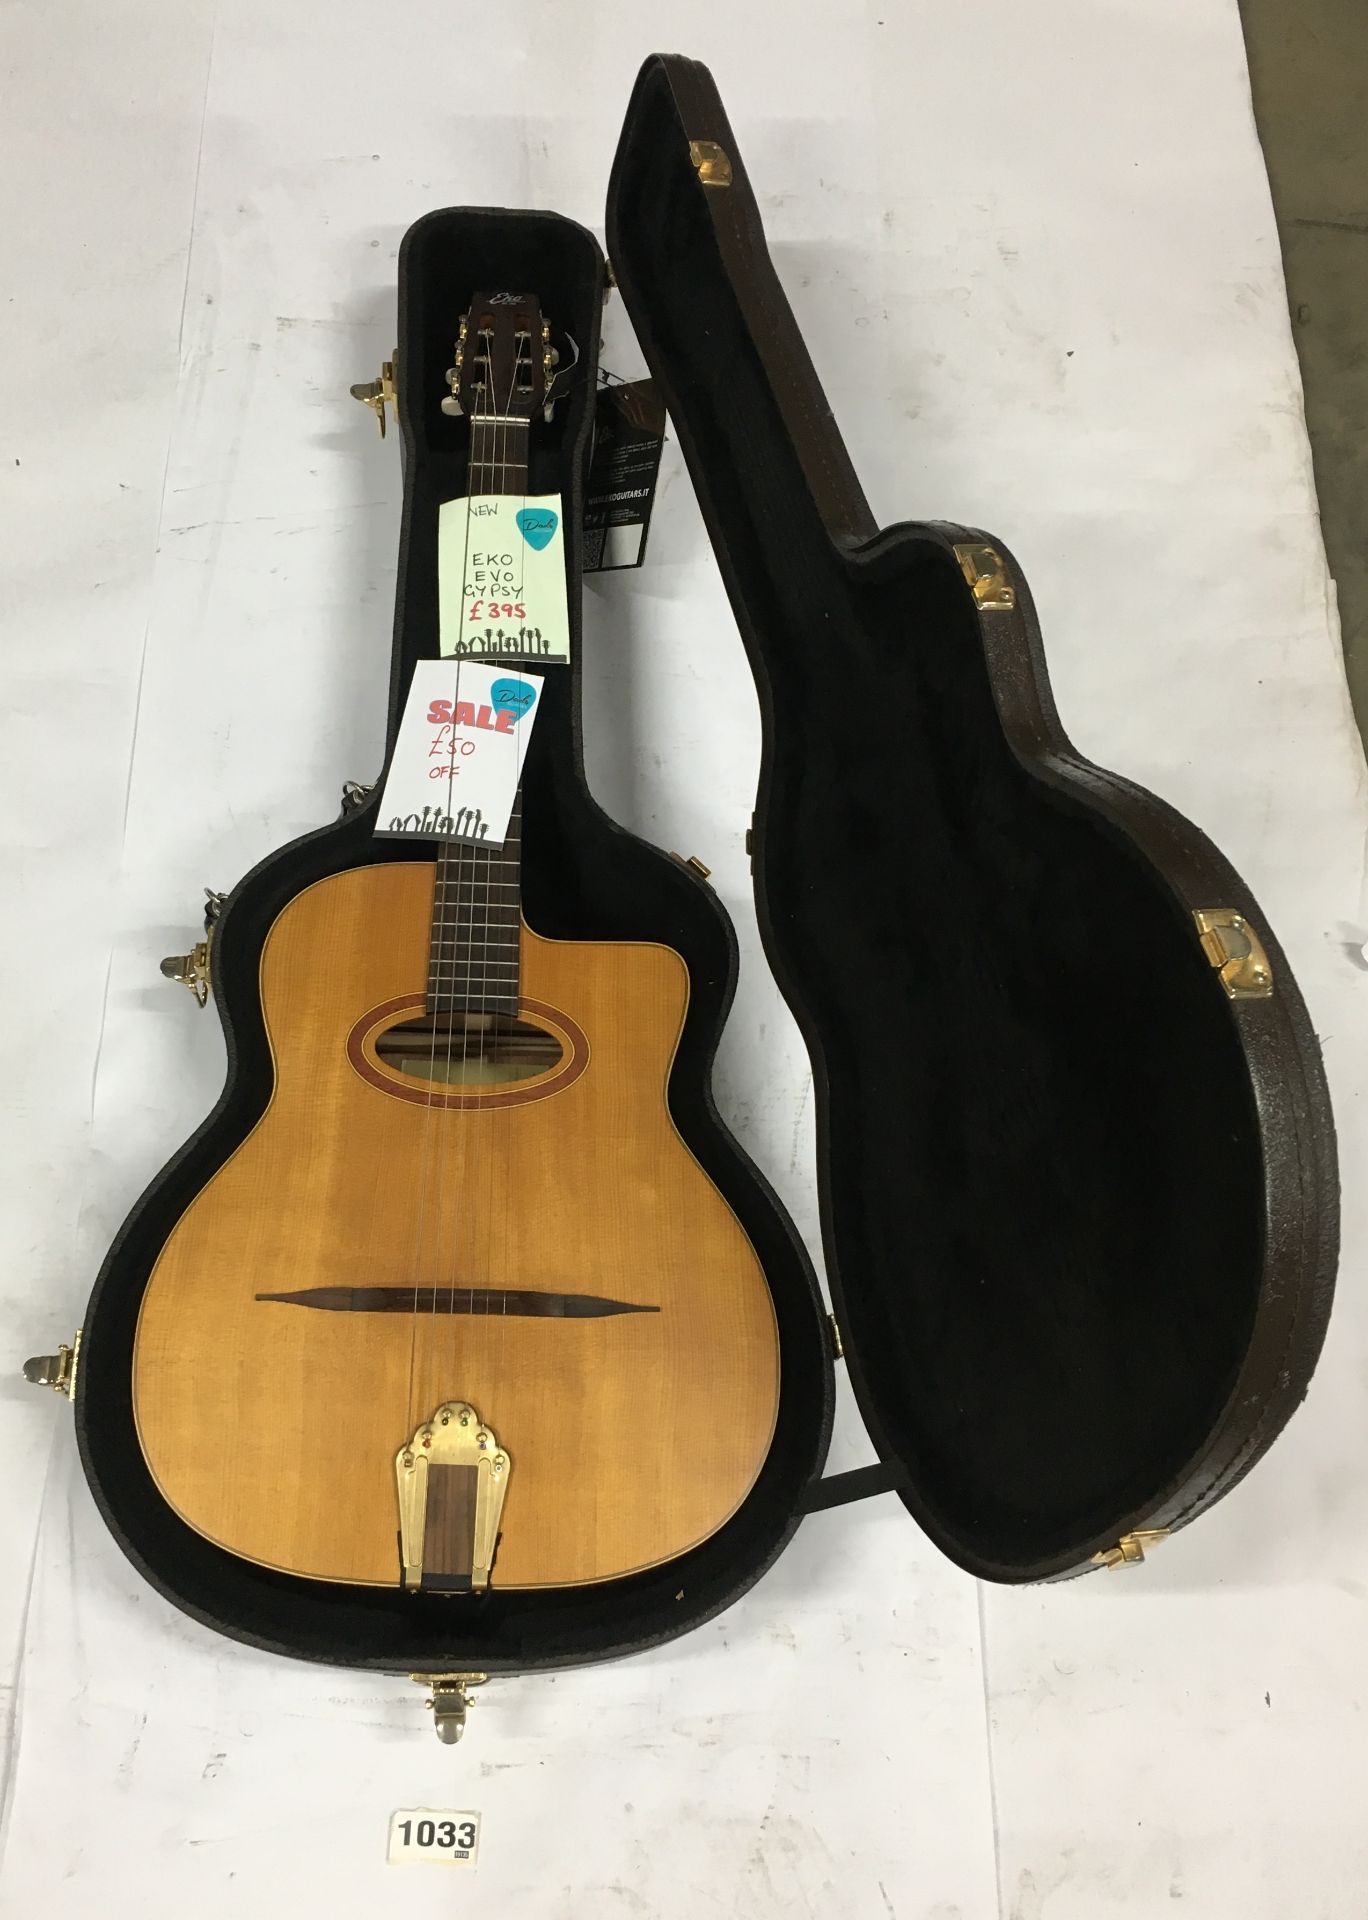 Eko Evo Gypsy Acoustic Guitar | New | In Case | RRP £395